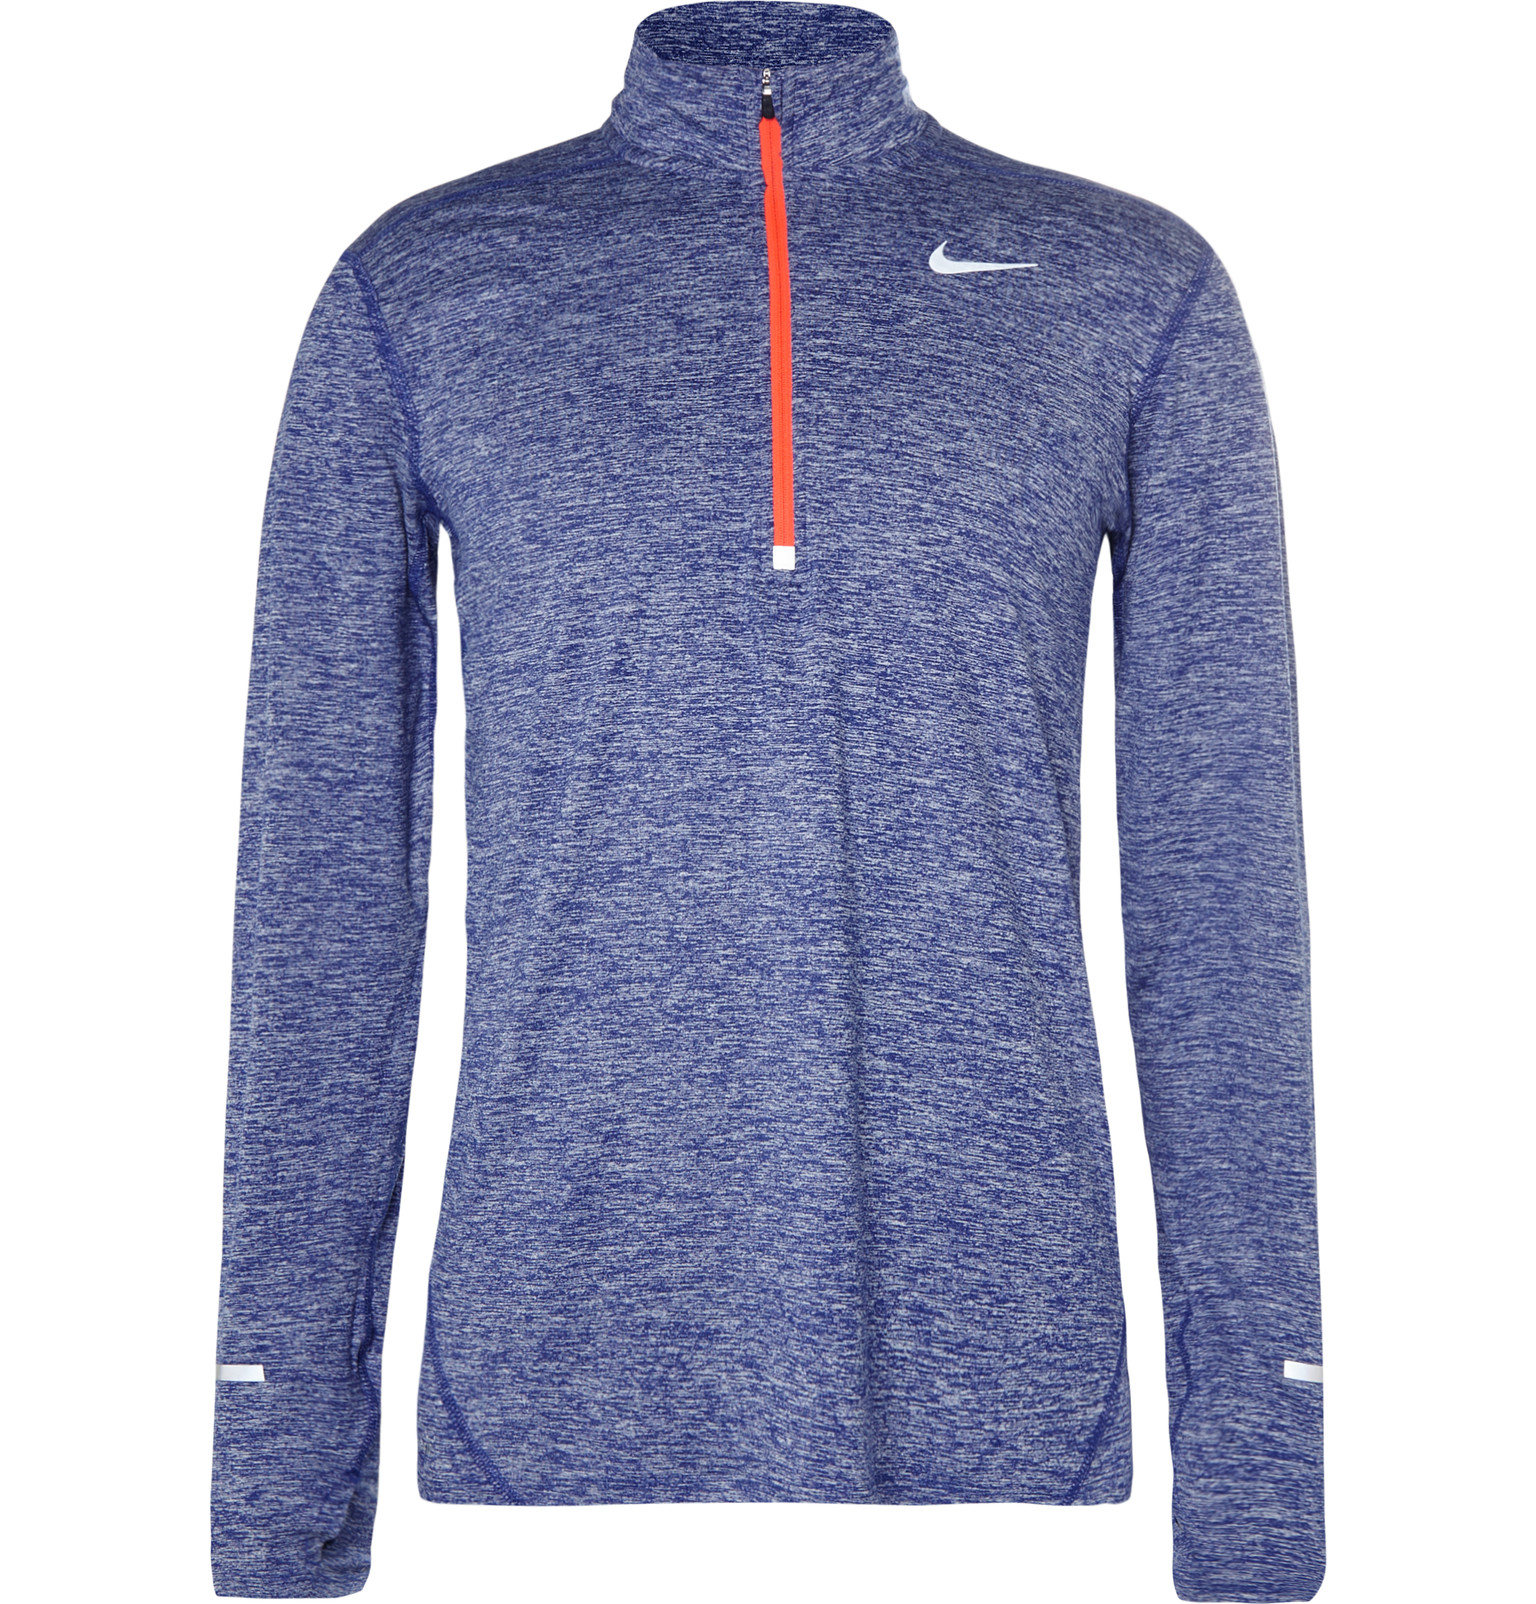 Nike Element Dri-fit Half-zip Top in Blue for Men - Lyst